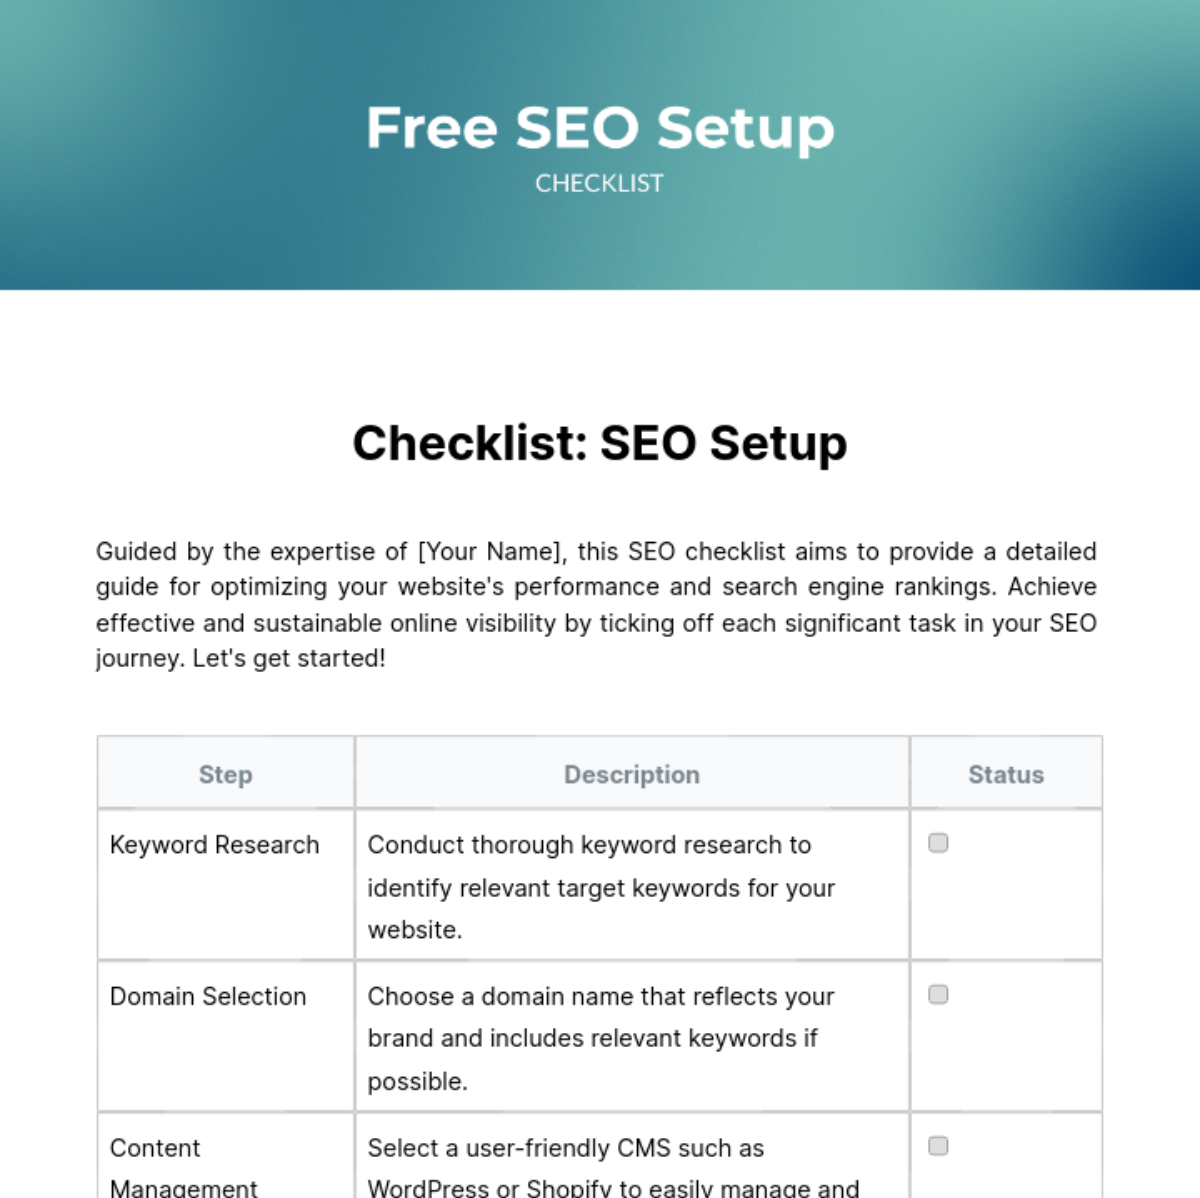 Free SEO Setup Checklist Template